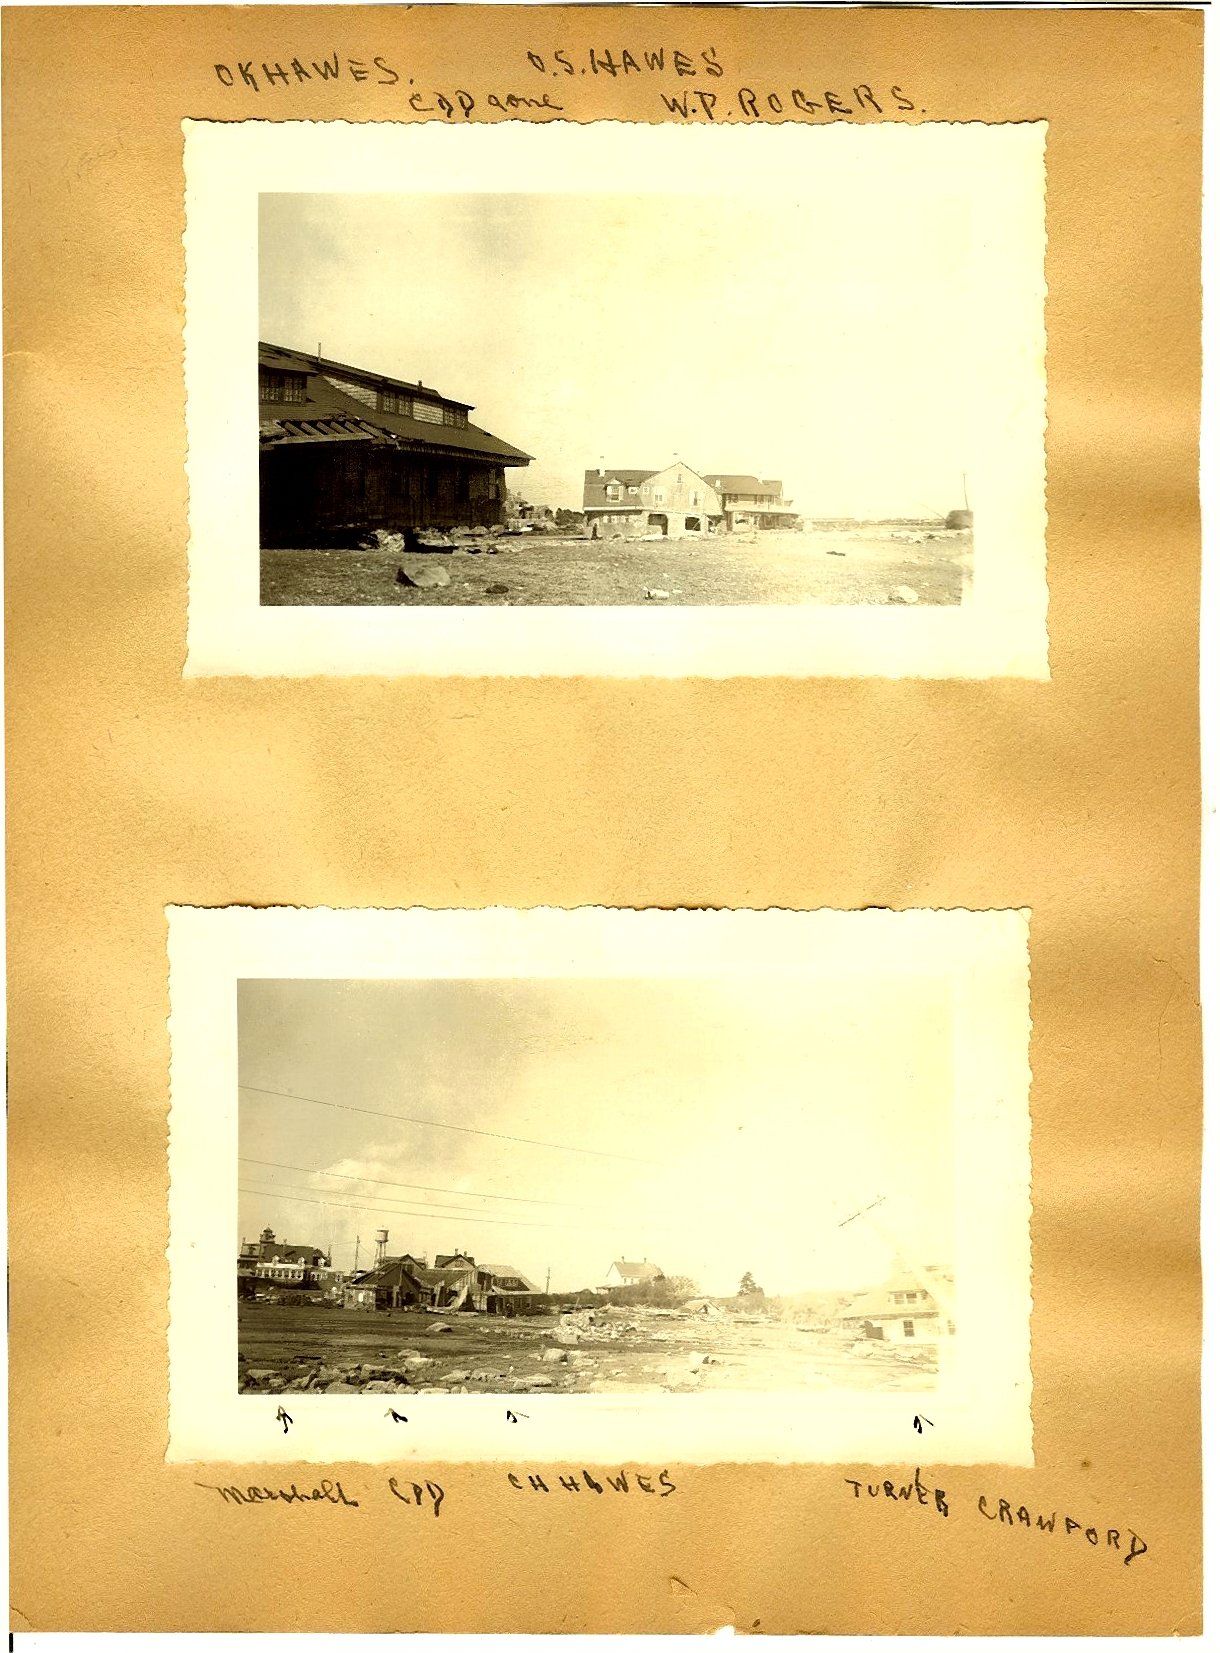 The 1938 Hurricane photos p28